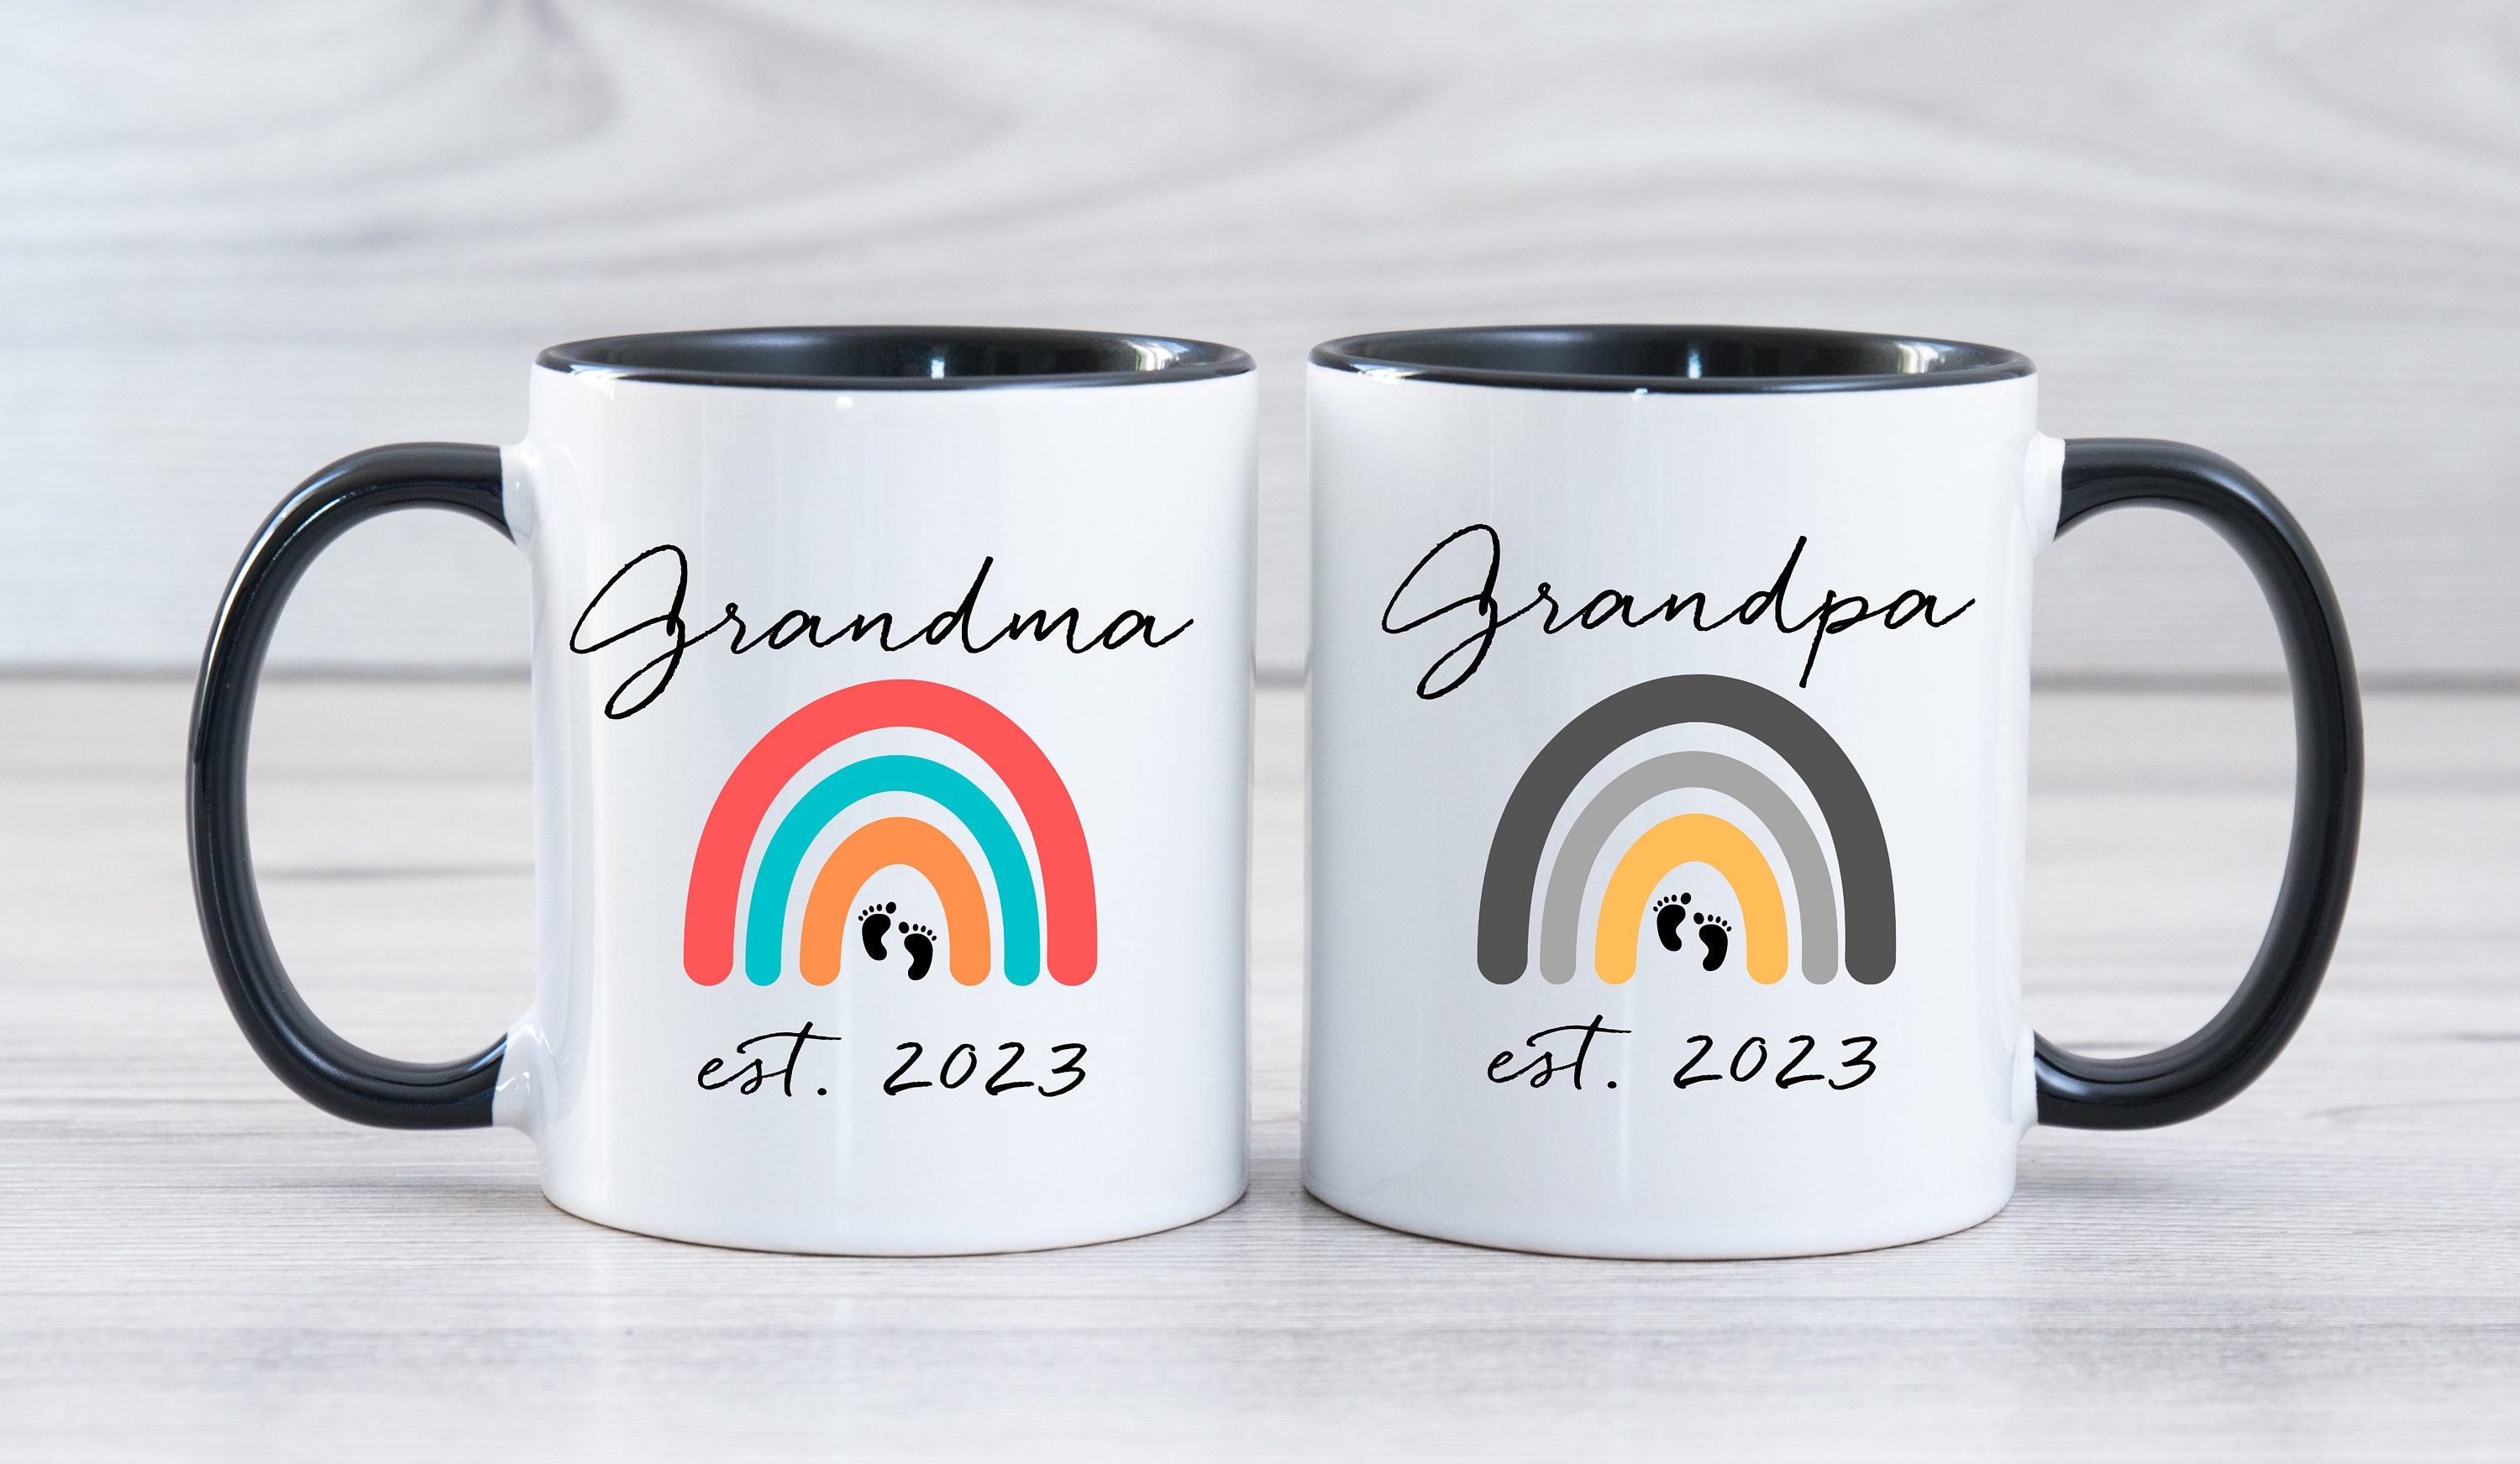 Promoted To Grandma Est. 2023 - Coffee Mug - Gifts For Grandma - Grand –  familyteeprints